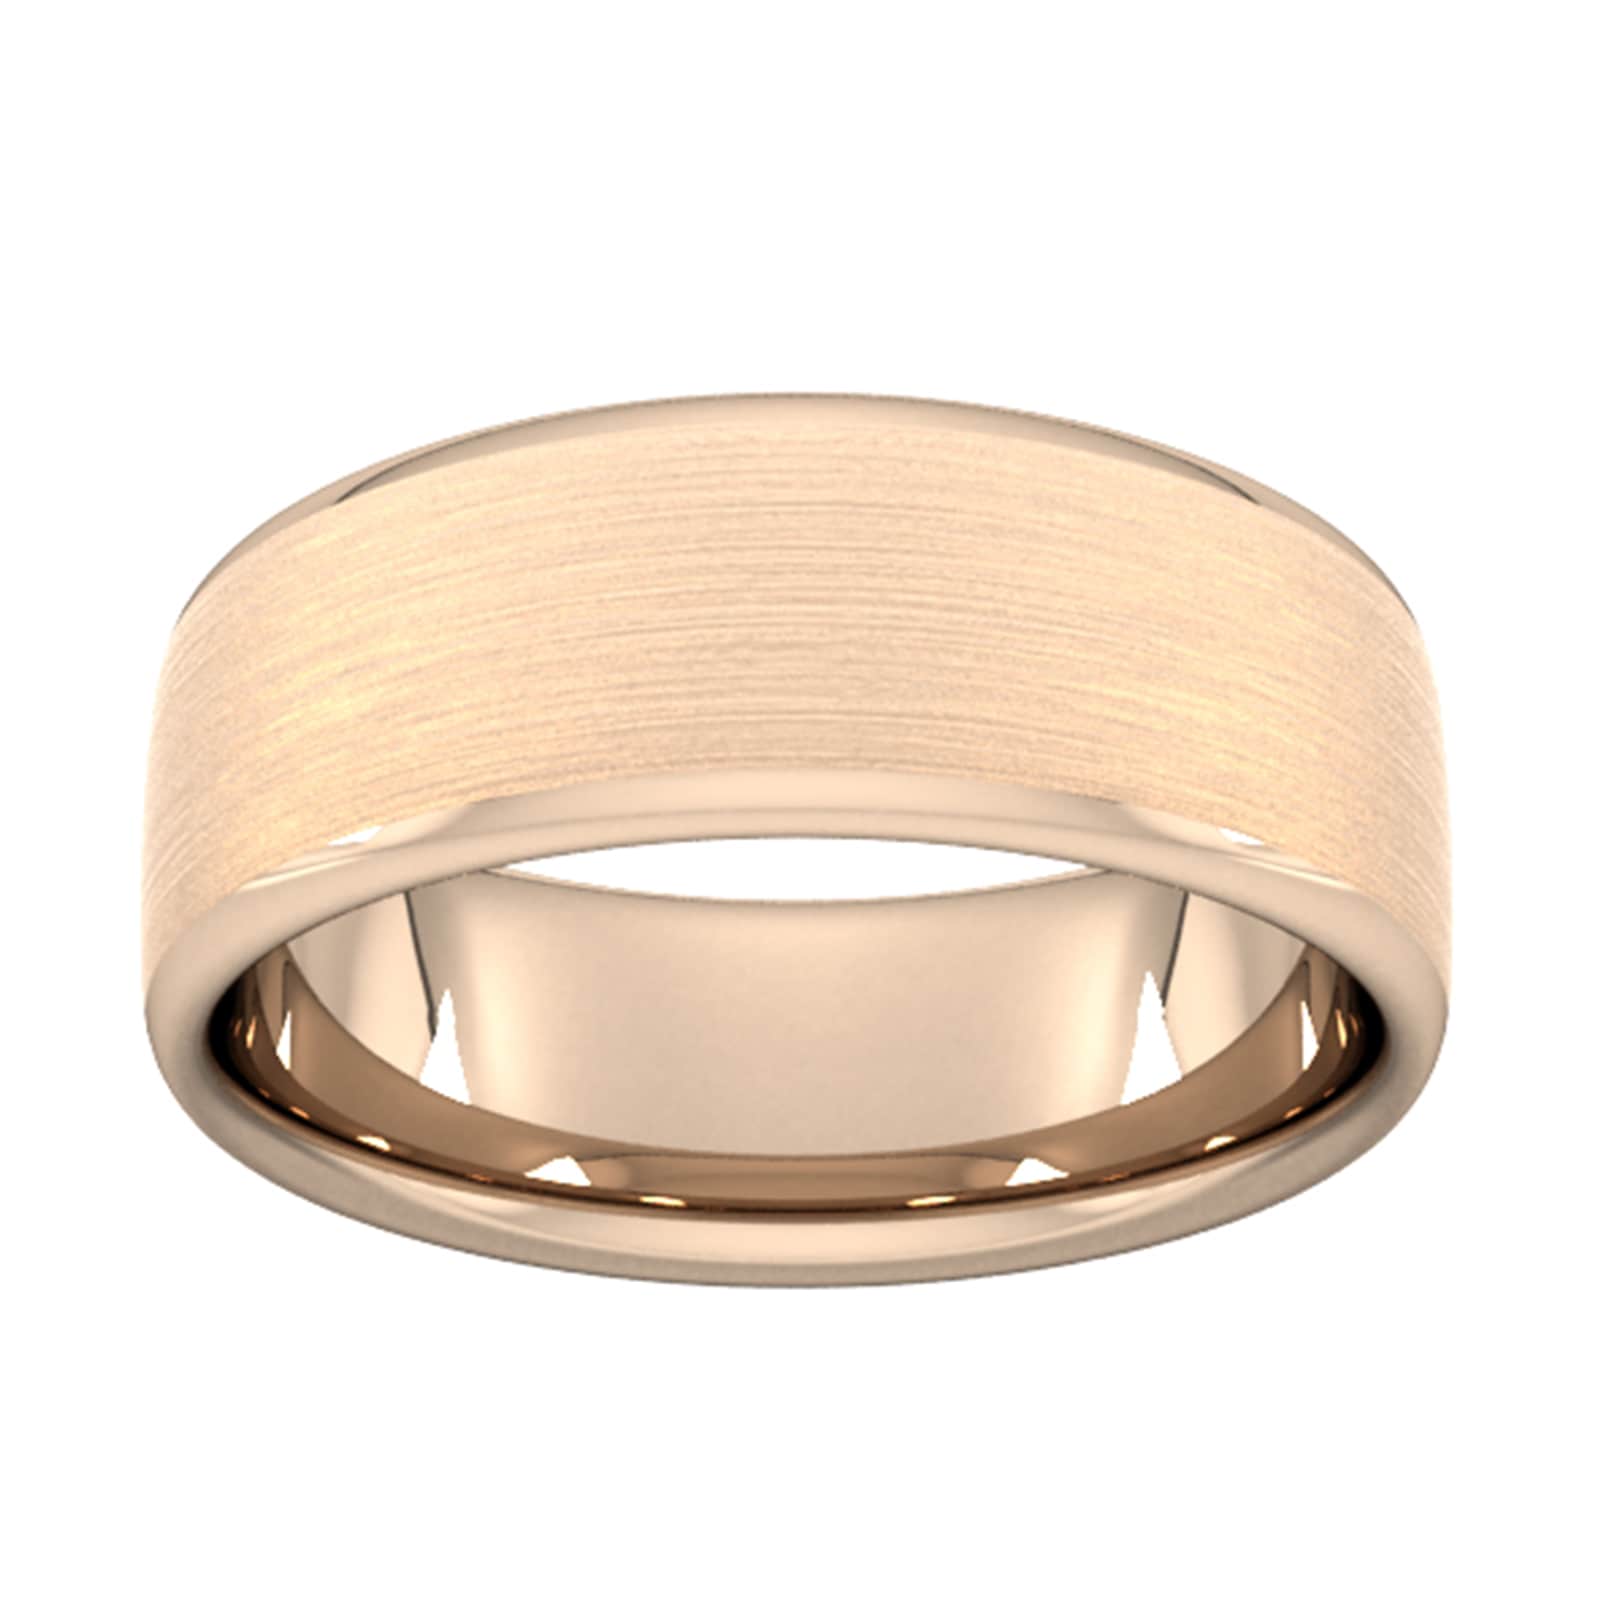 8mm Slight Court Heavy Matt Finished Wedding Ring In 9 Carat Rose Gold - Ring Size Q